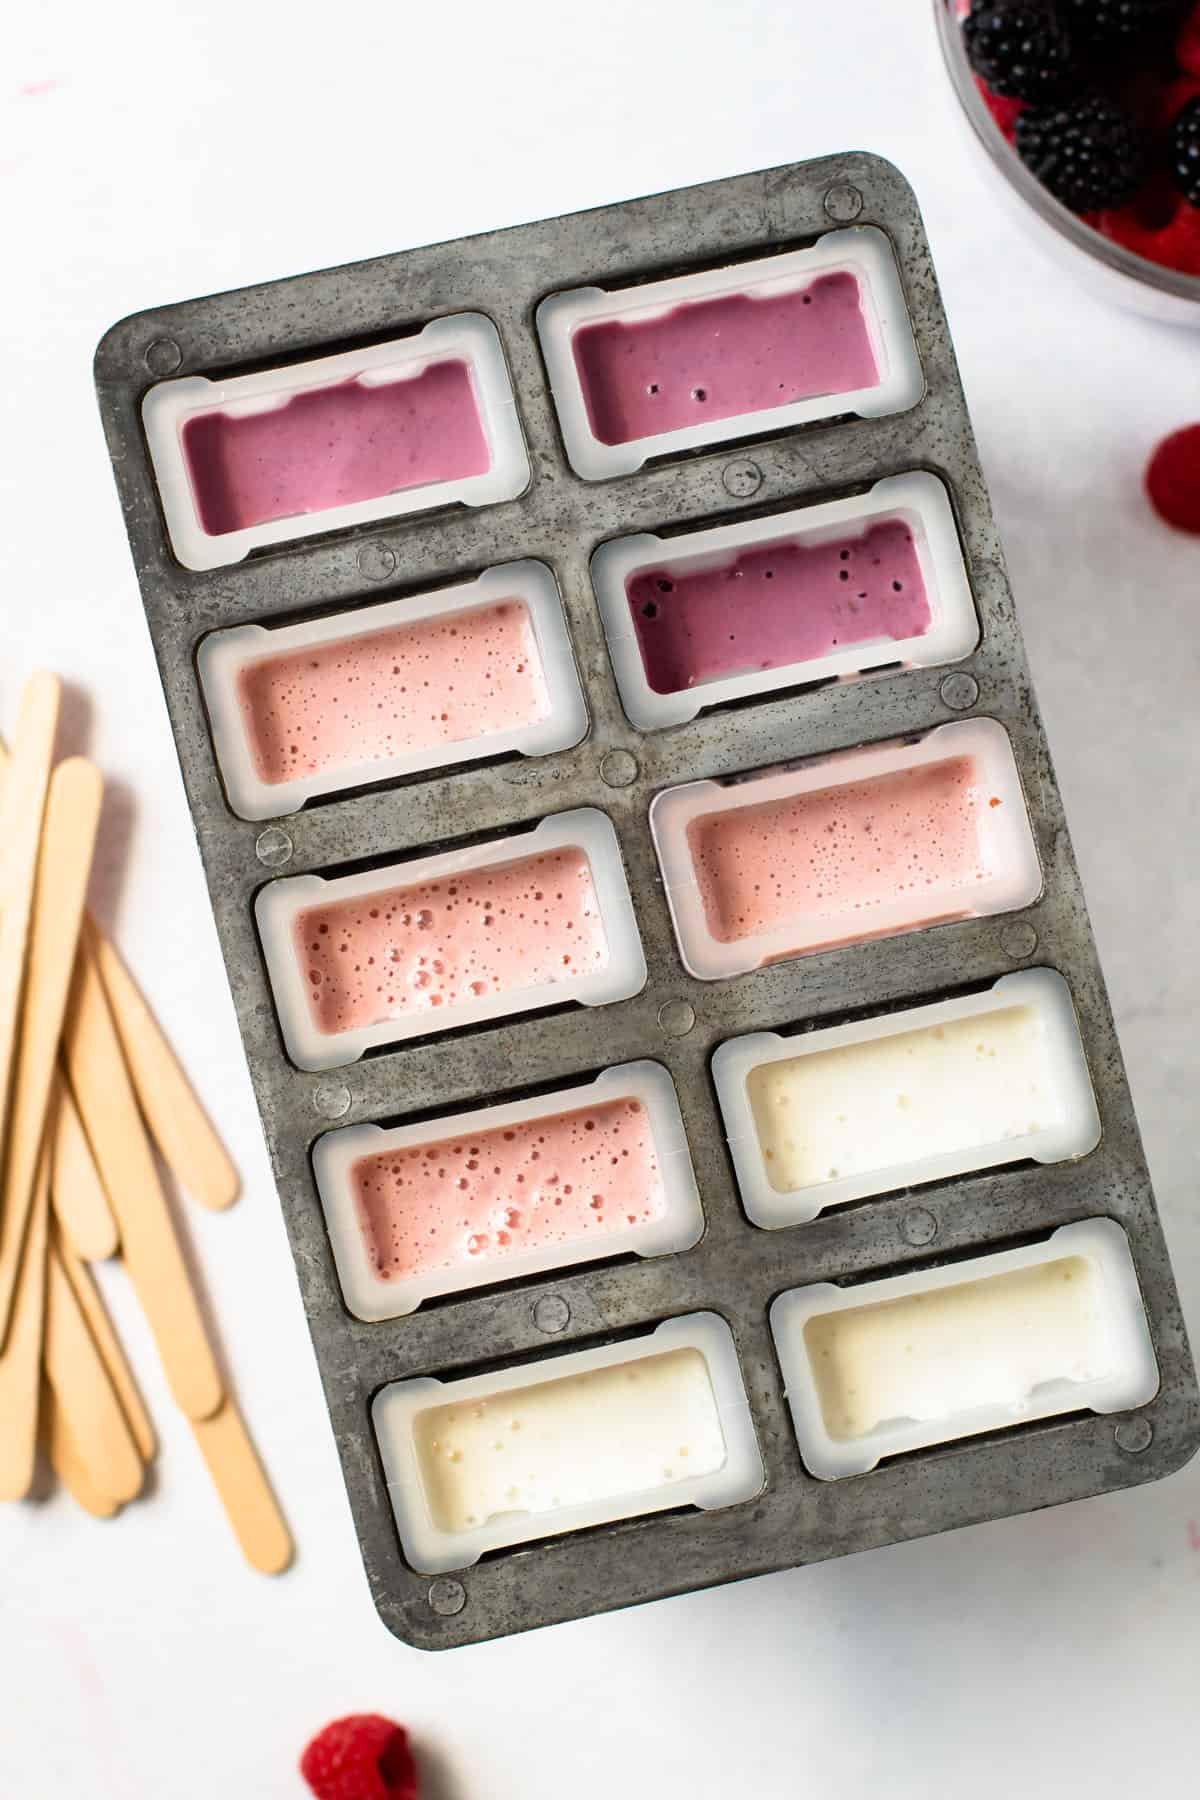 Different fruit yogurt popsicles in molds.